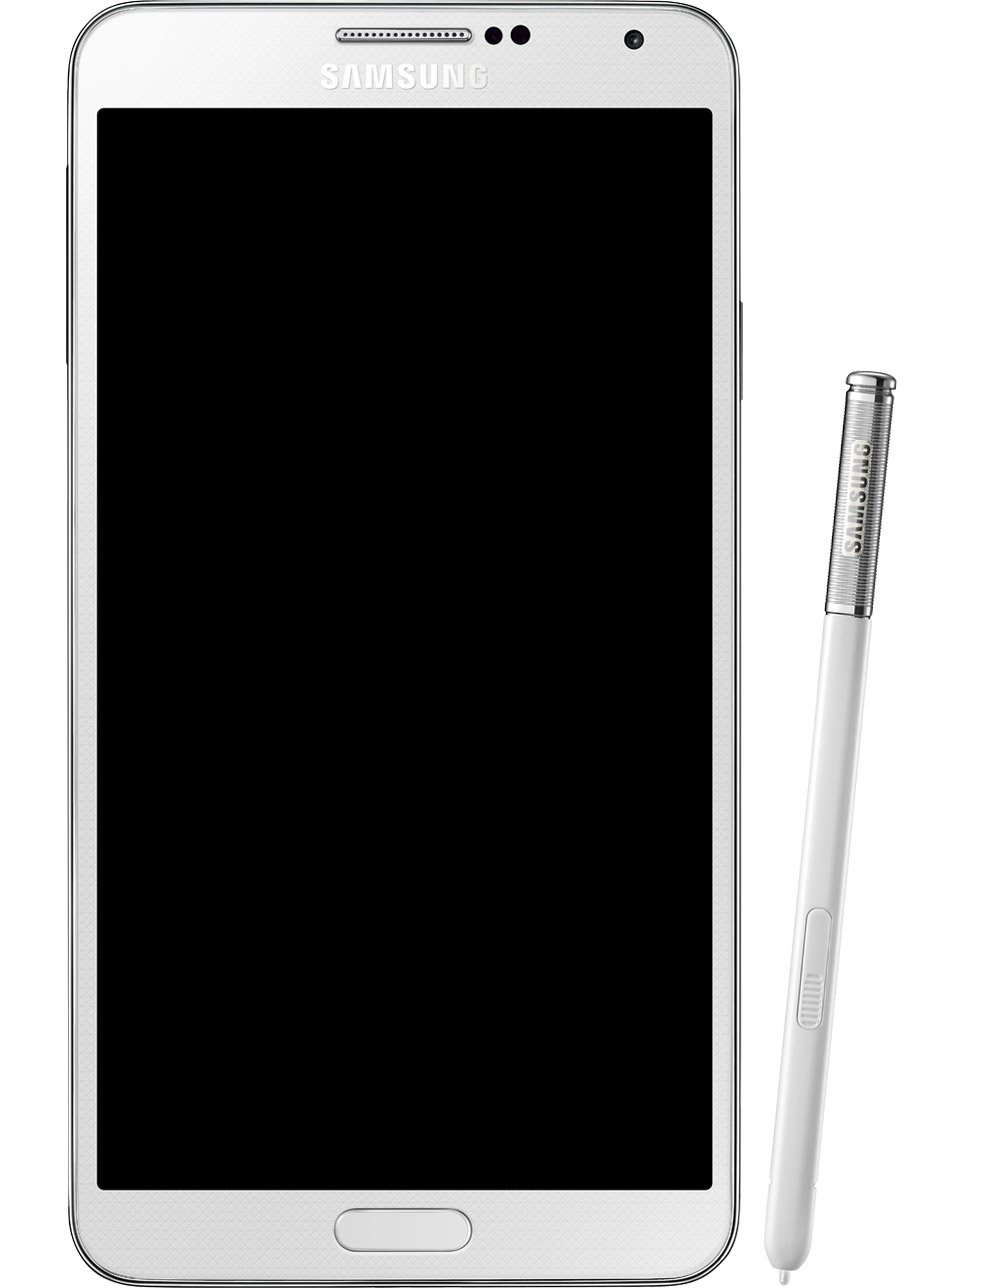 Samsung Galaxy Note 3 N9005 32GB 4G LTE WHITE Unlo…